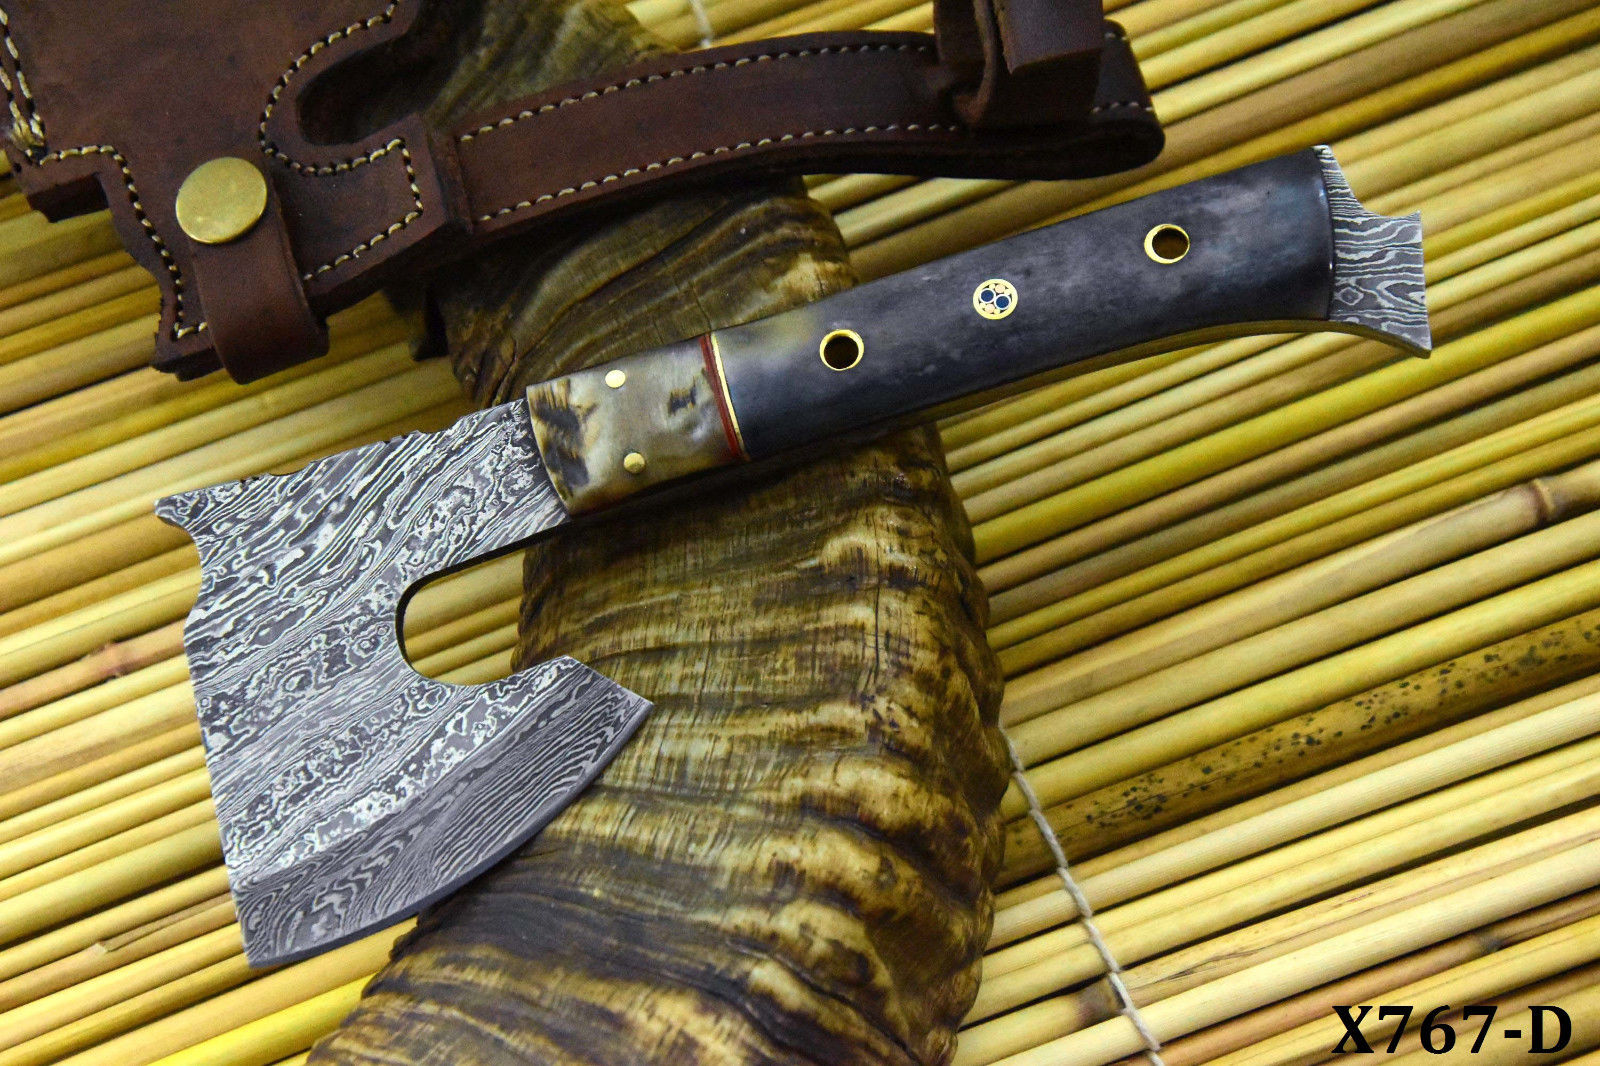 Damascus Axe Hunting Knife Handmade With Camel Bone & Rams Horn Handle (X767-D)